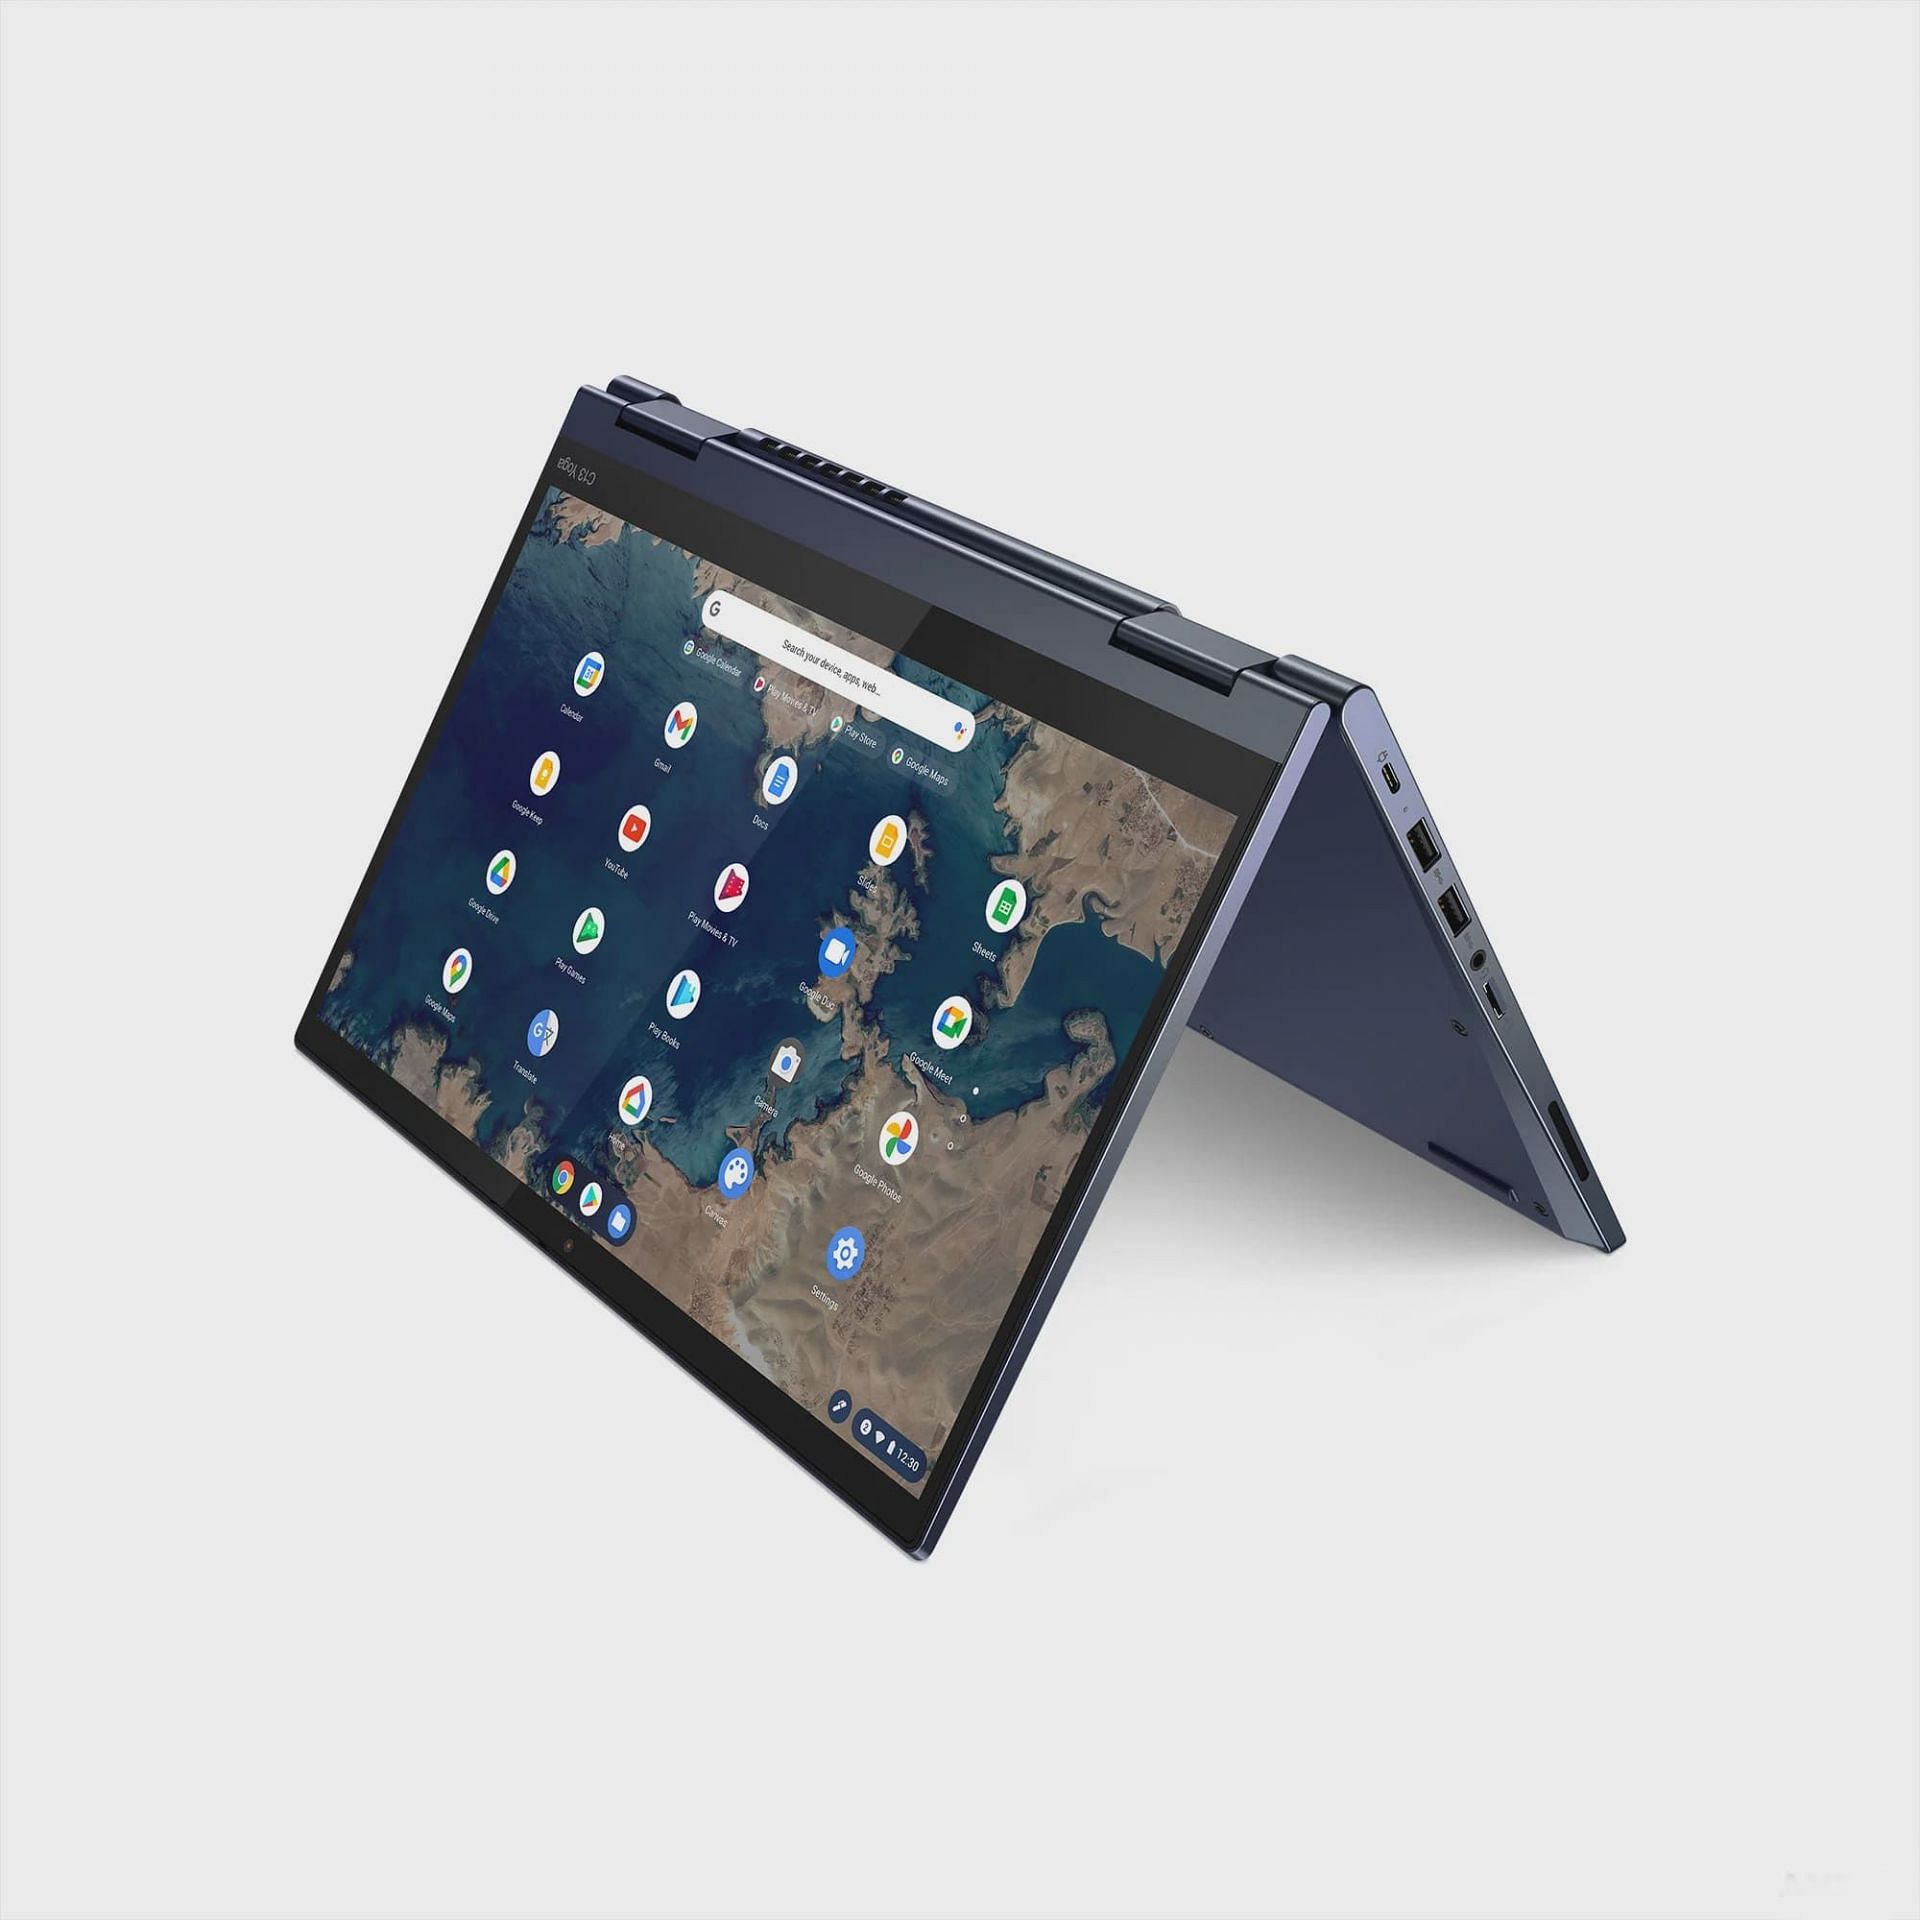 The Lenovo ThinkPad C13 Yoga Chromebook (Image via Amazon)